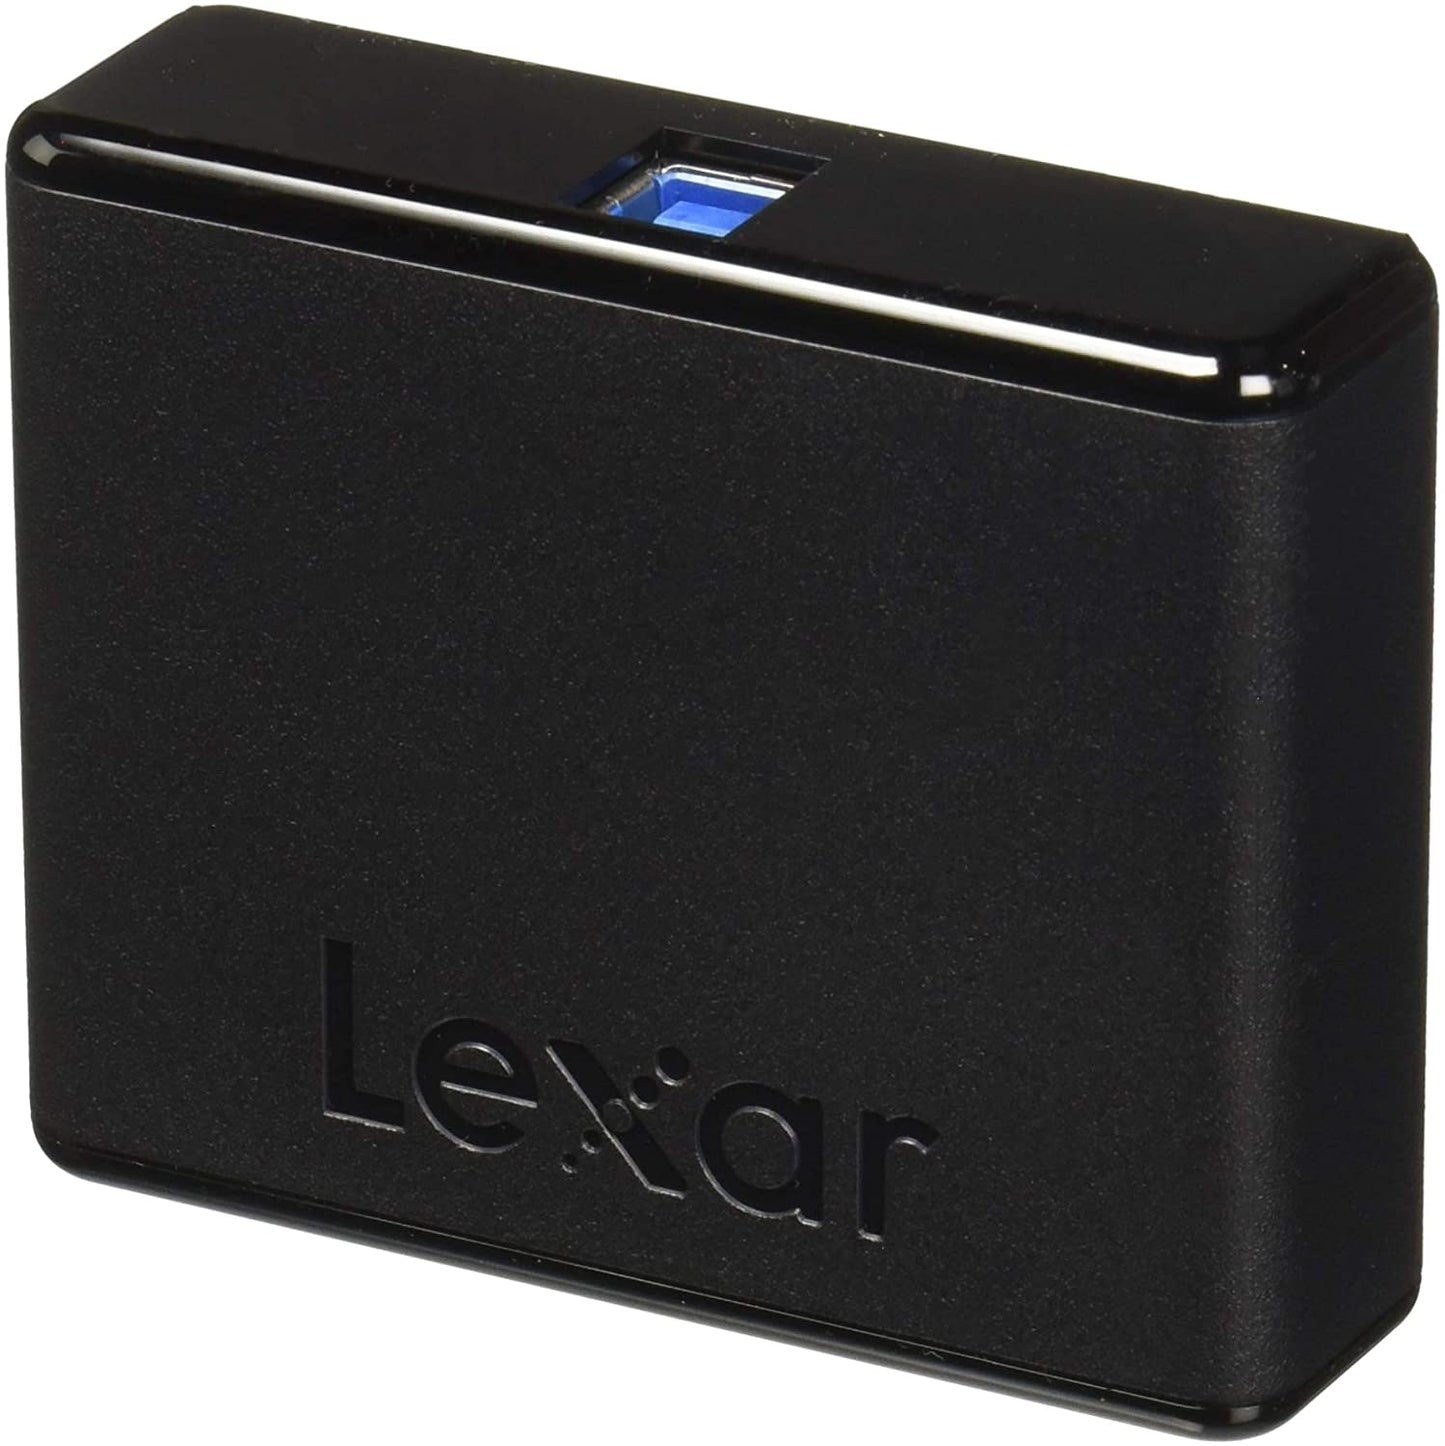 Lexar LRWCFR1RBNA Professional Workflow CFR1 Card Reader for Compact Flash Cards for Mac, Windows